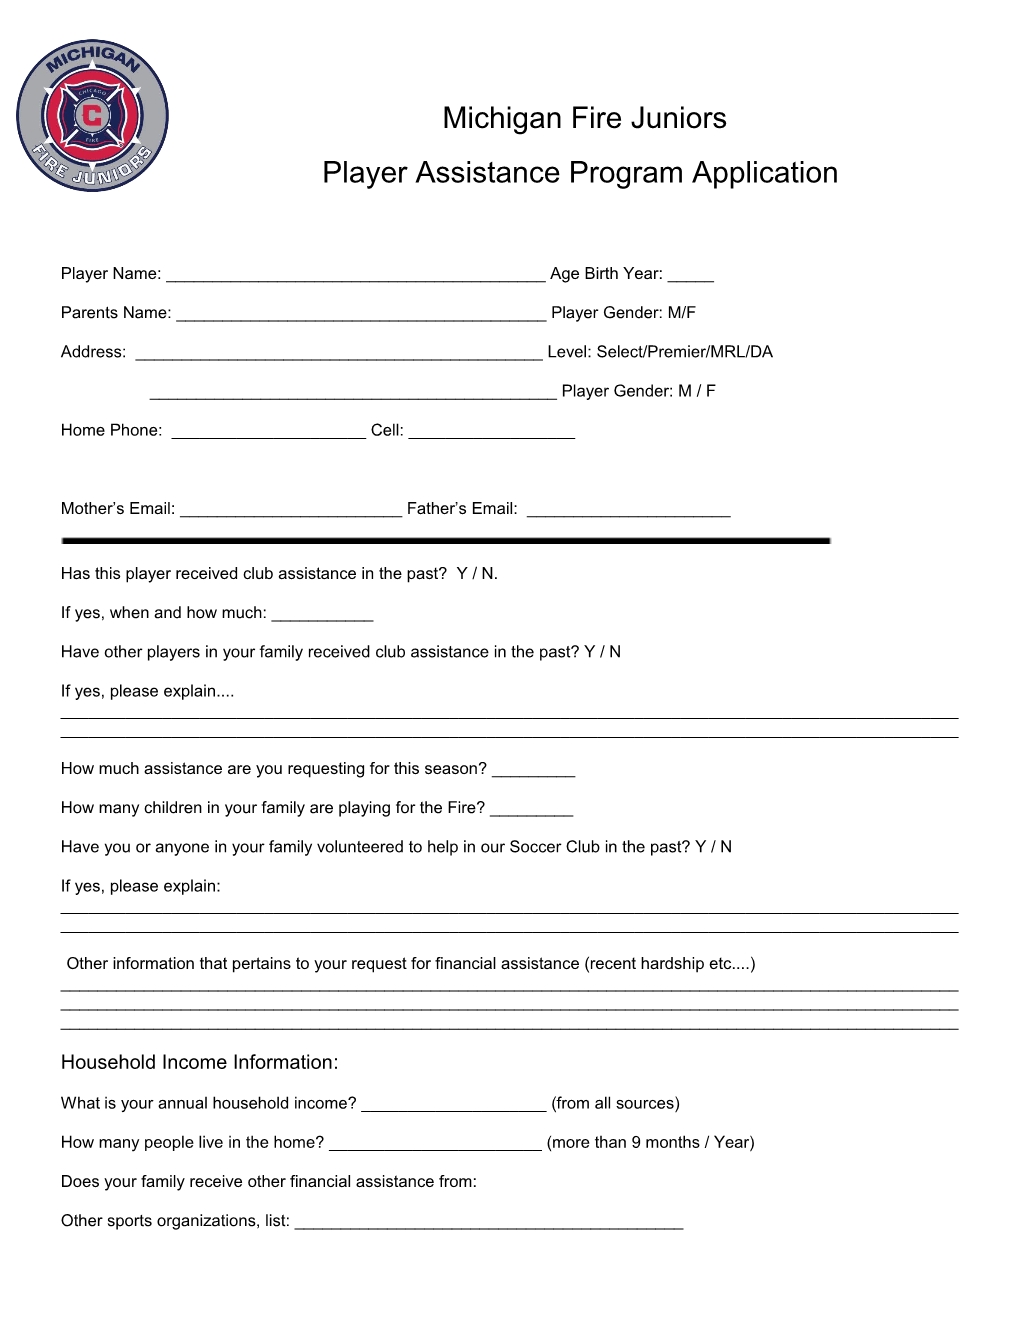 Player Assistance Program Application